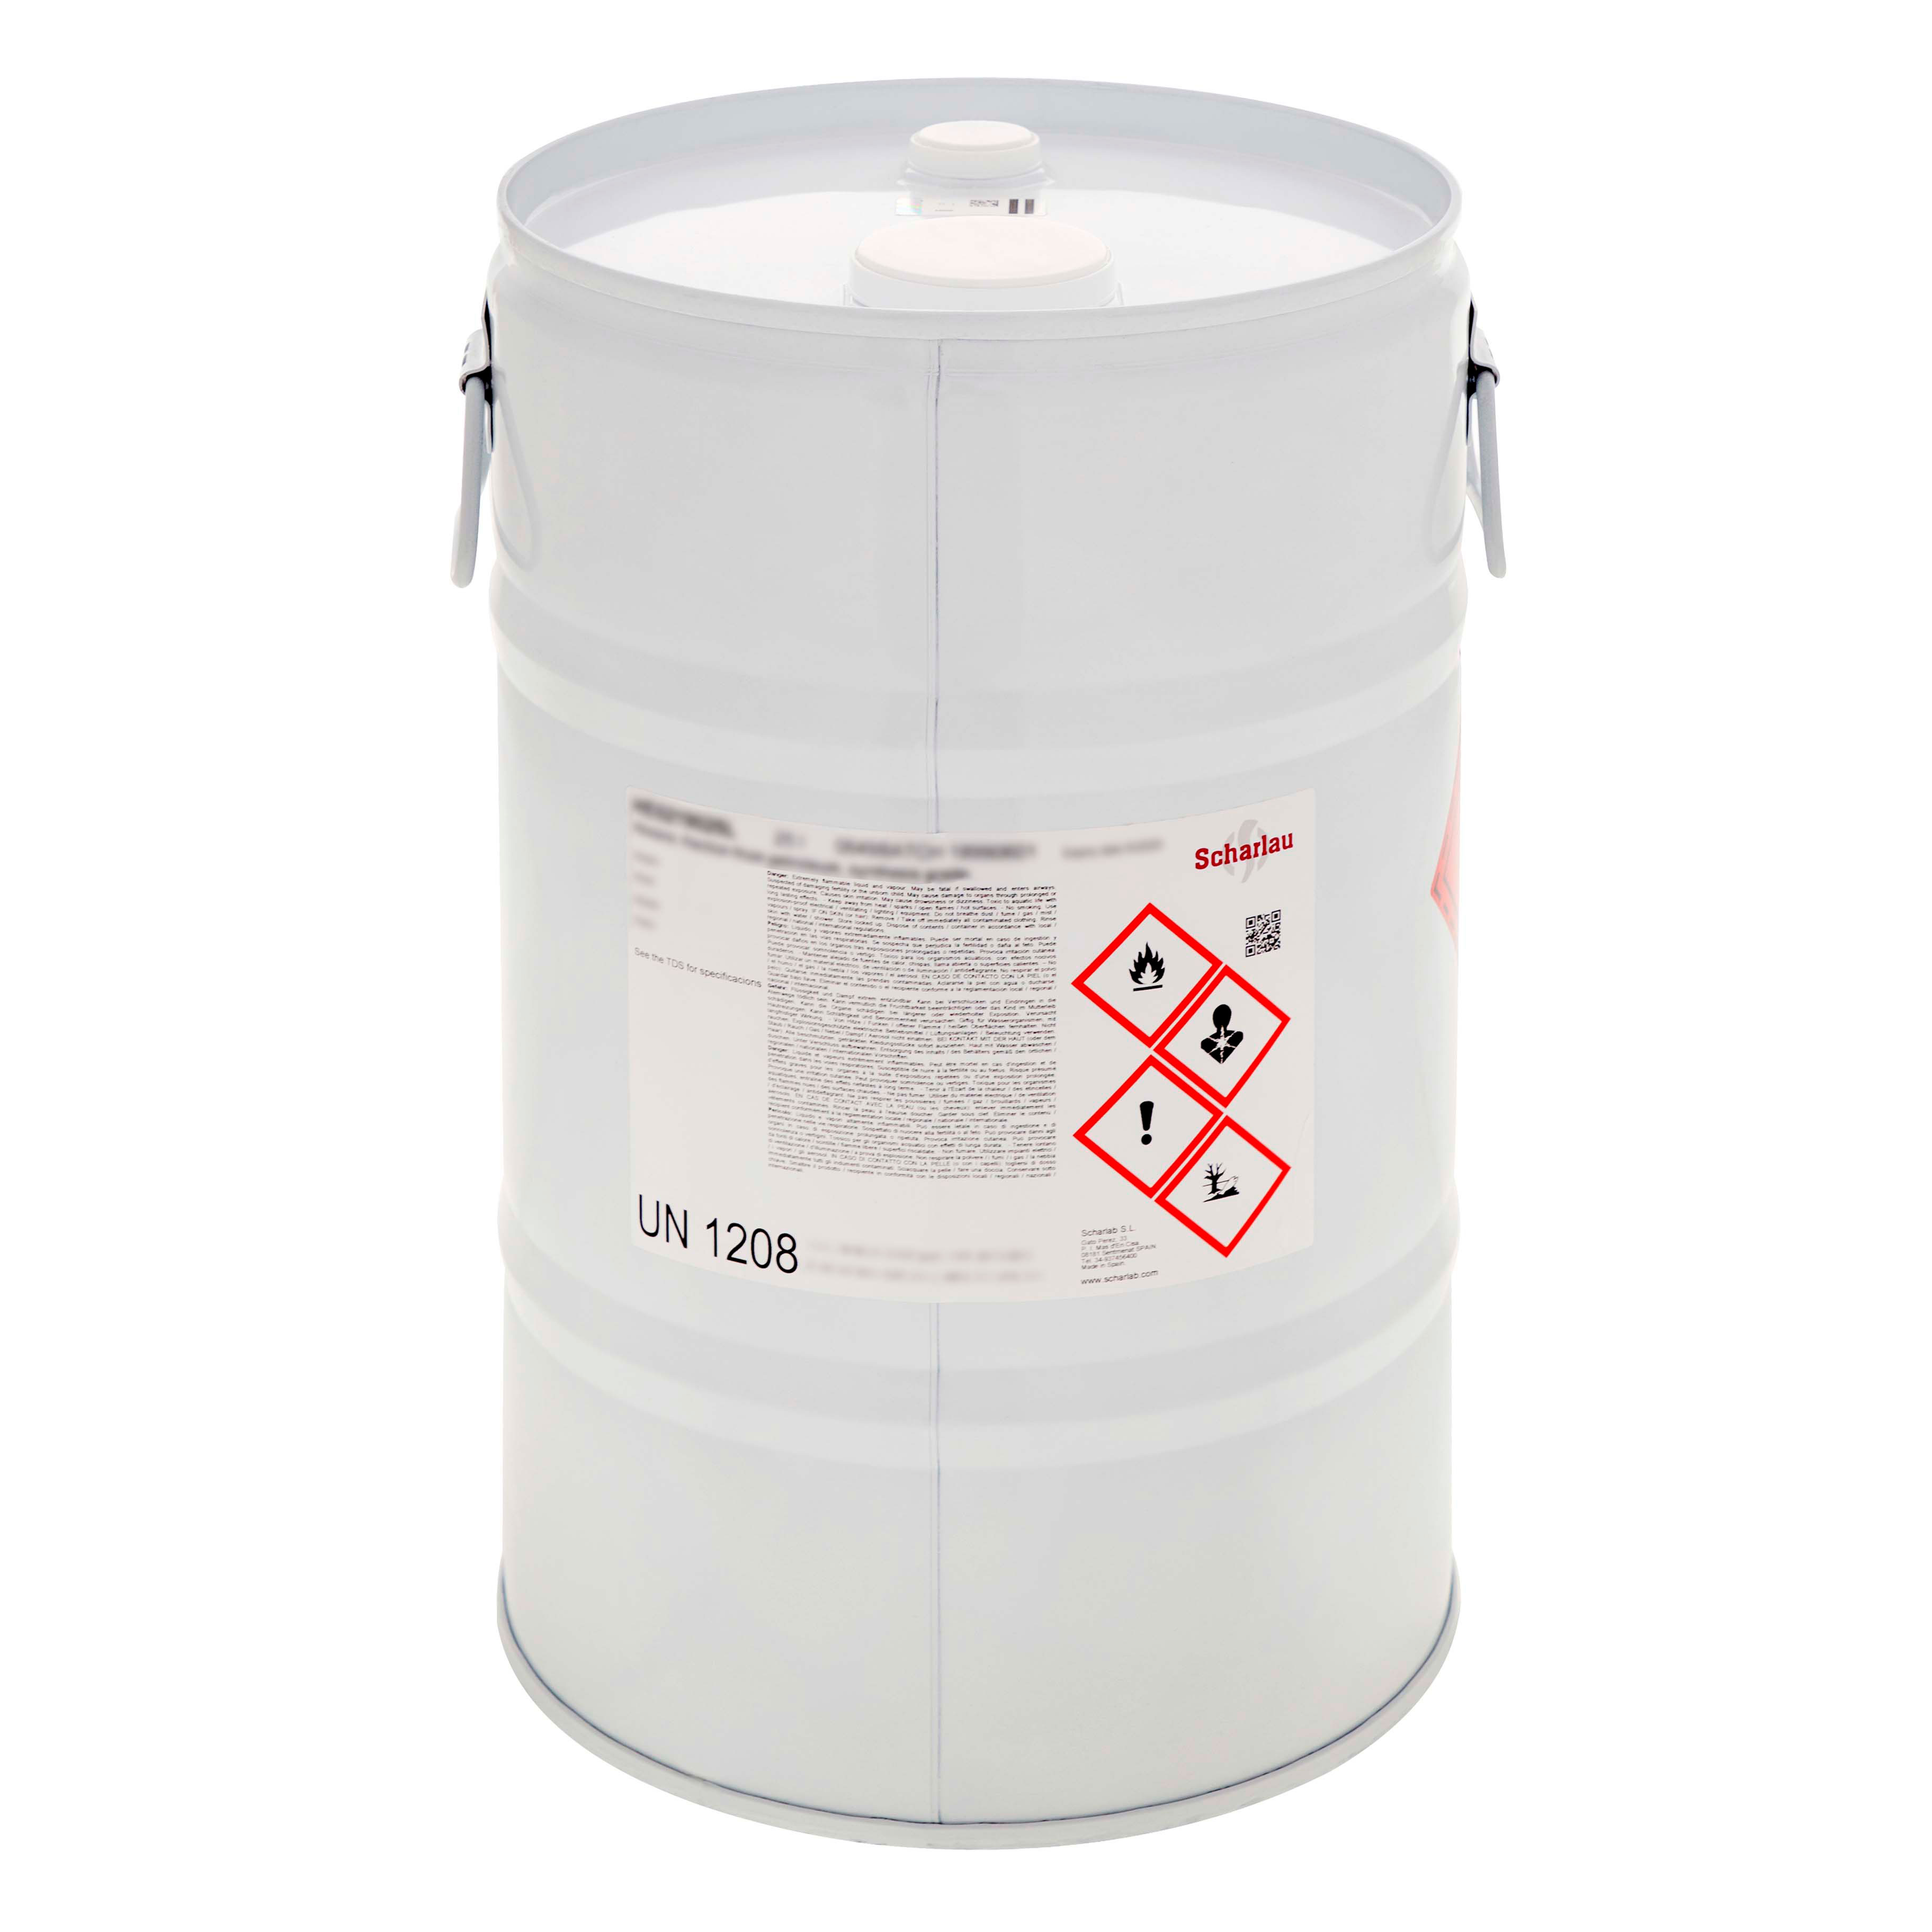 Diclorometano, EssentQ®, estabilizado con aprox. 50 ppm de amileno